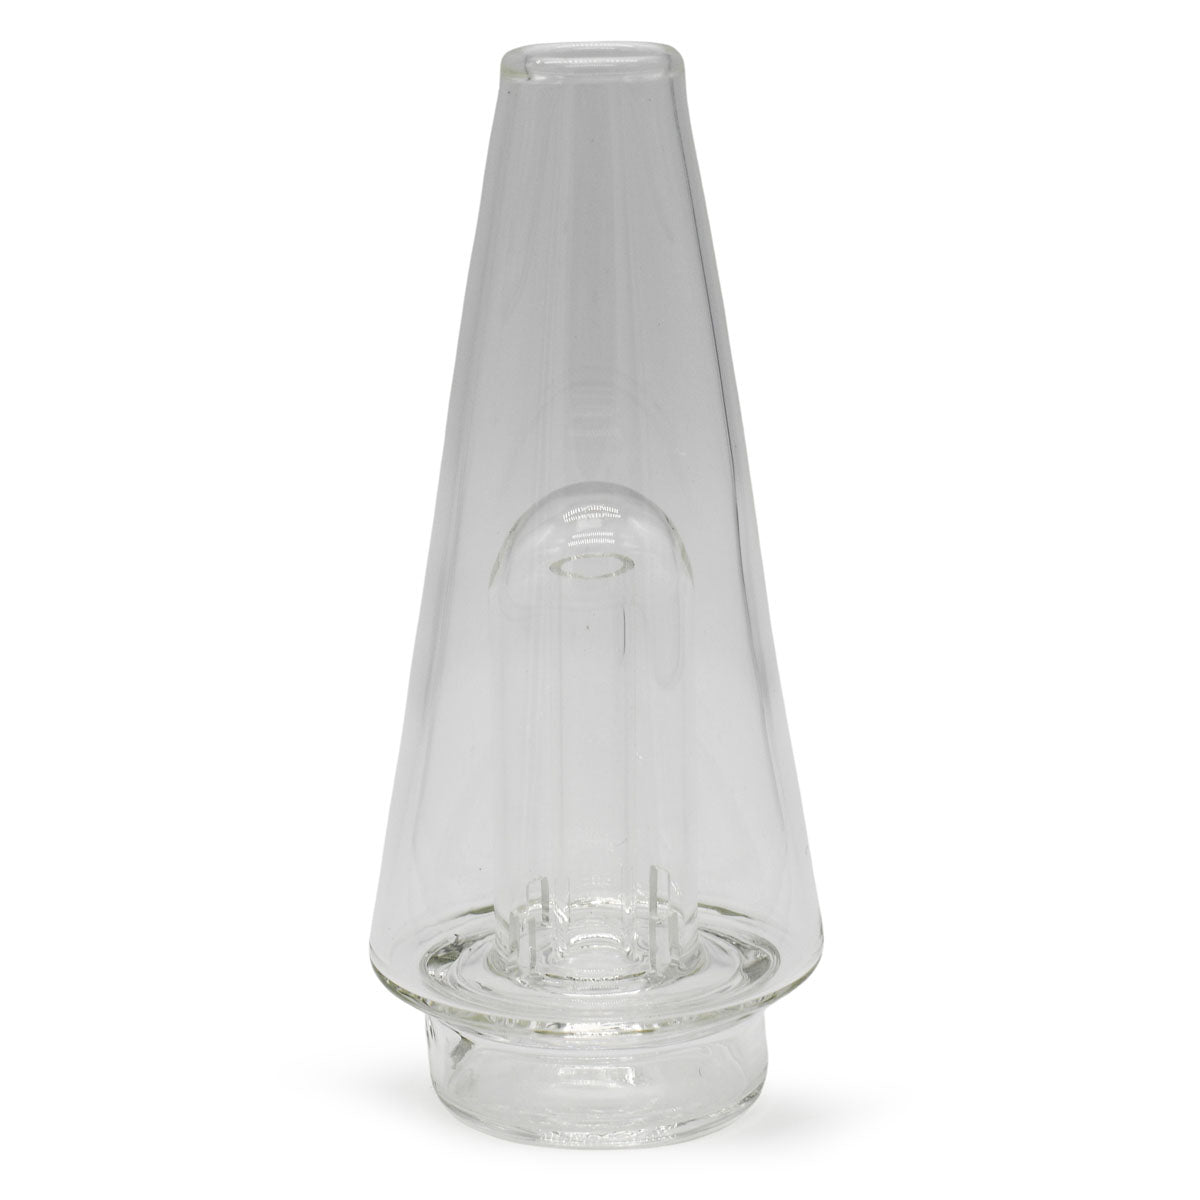  E Rig Ripper Glass Bubbler Replacement